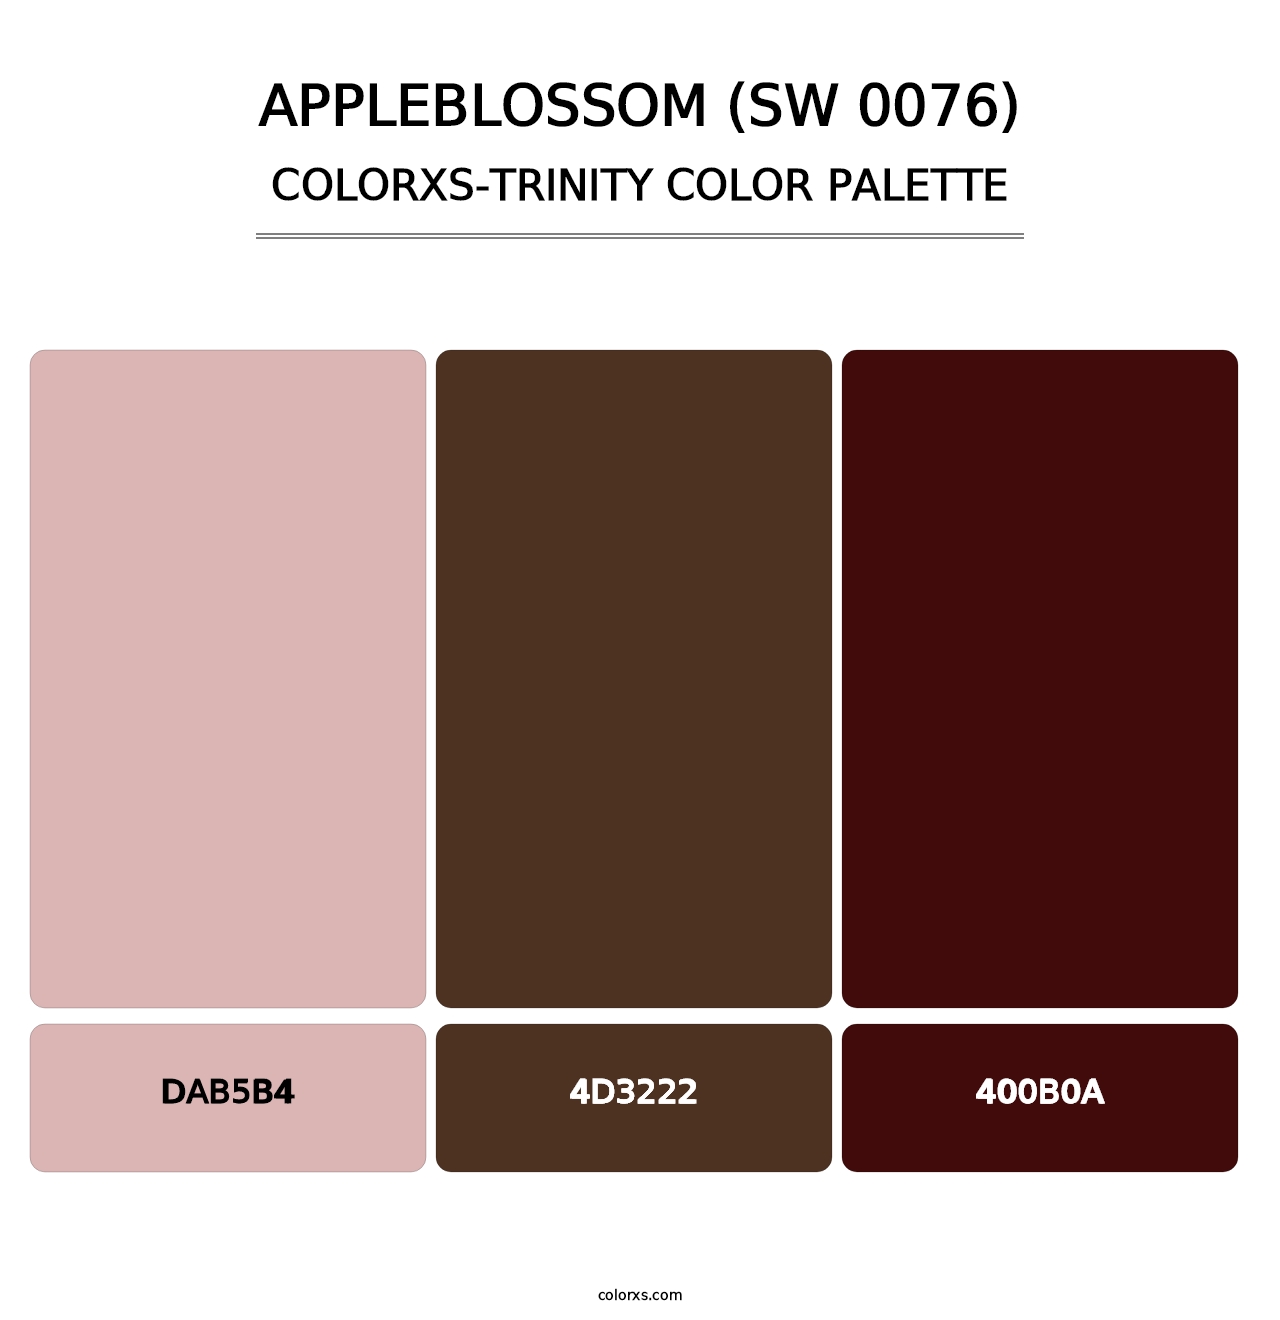 Appleblossom (SW 0076) - Colorxs Trinity Palette